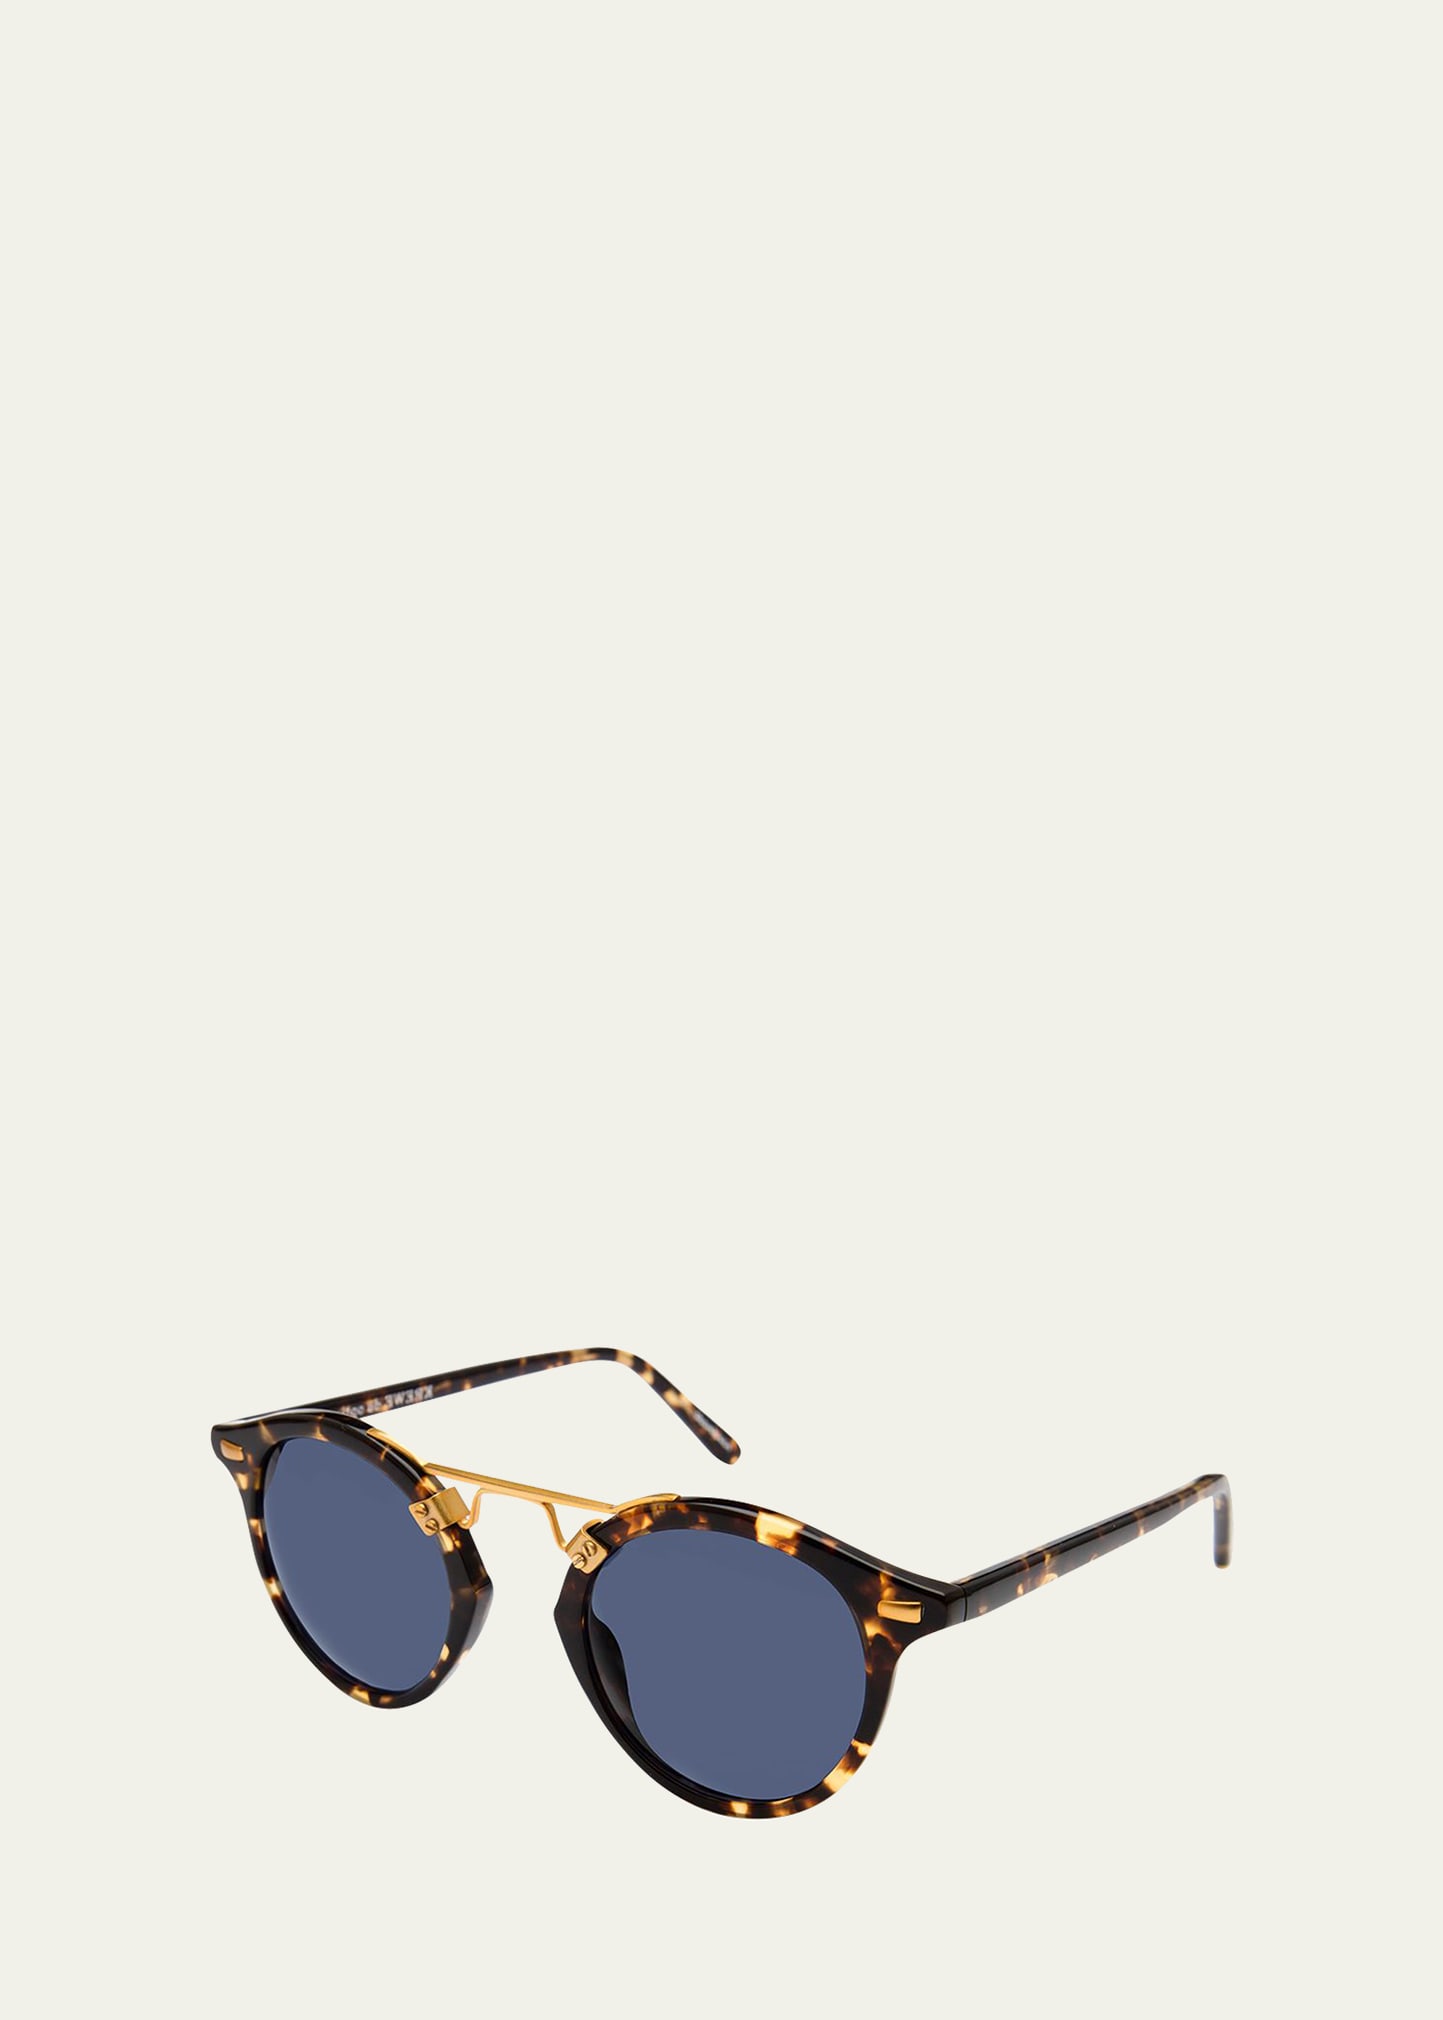 KREWE St. Louis Round Polarized Sunglasses, Blue/Brown Tortoise